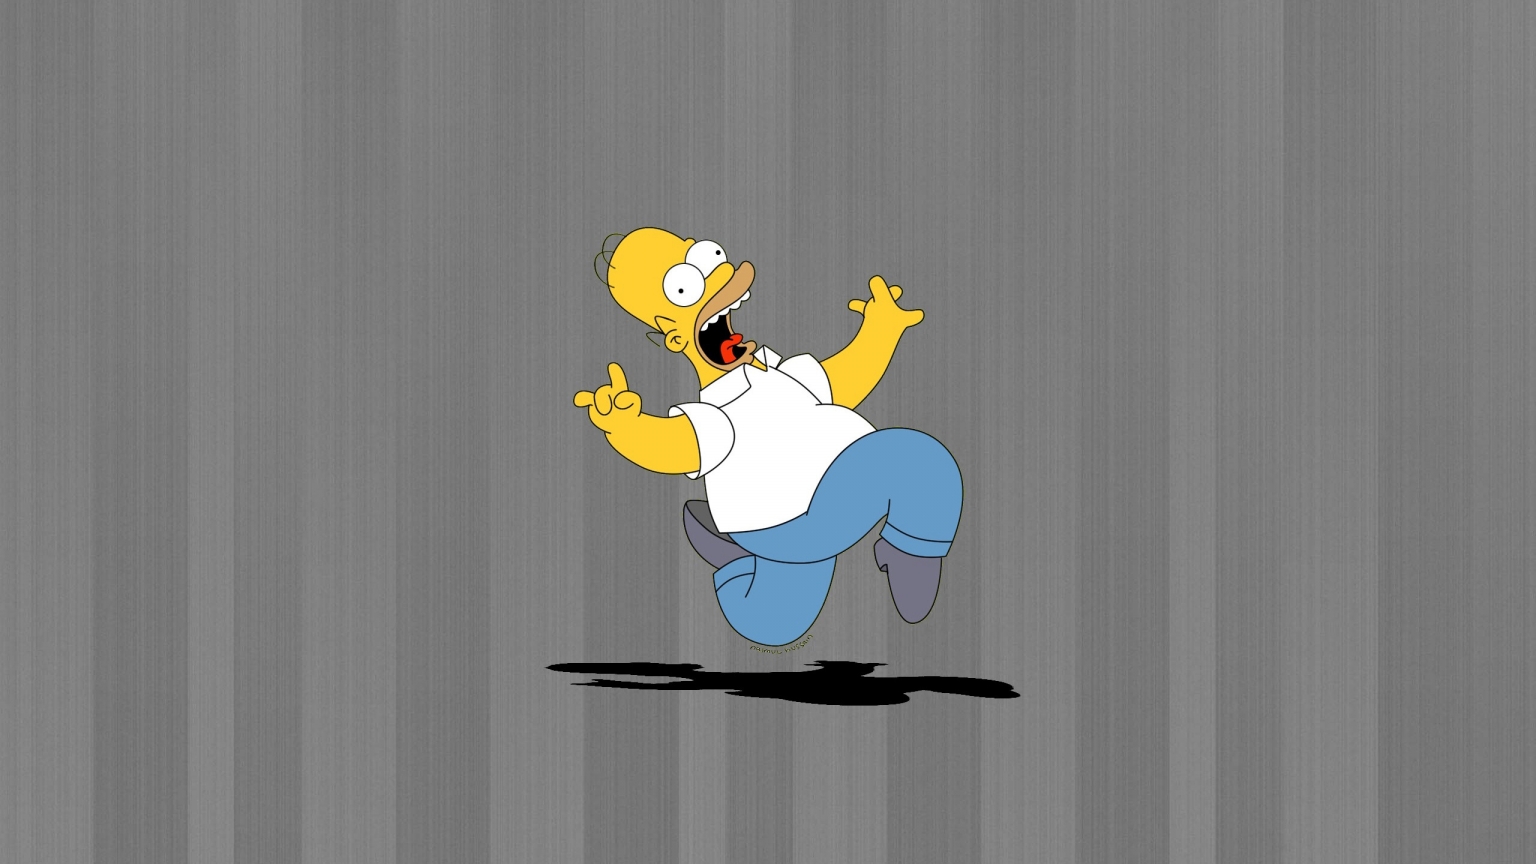 Happy Homer Simpson for 1536 x 864 HDTV resolution